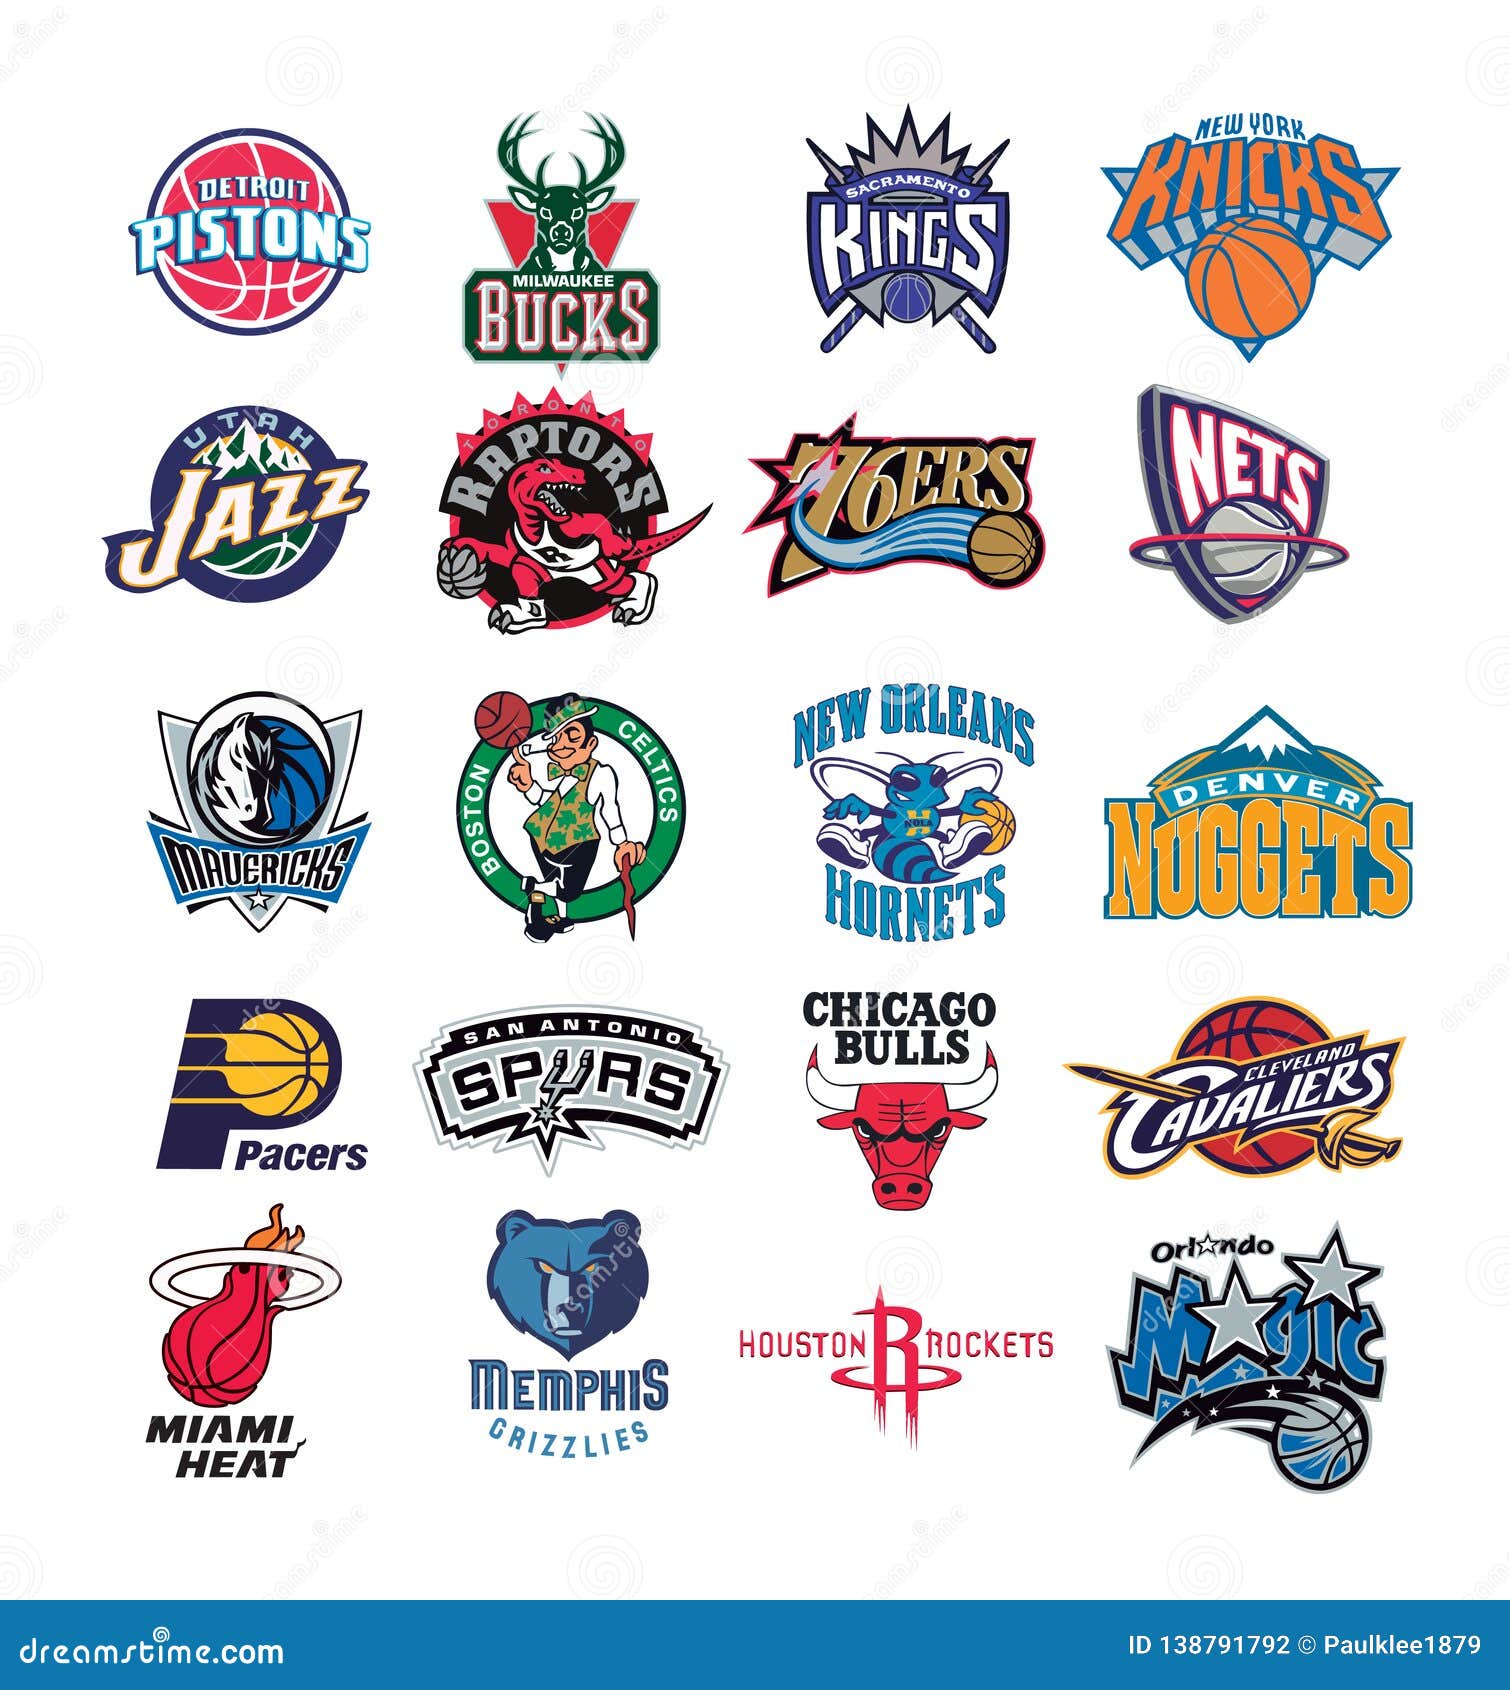 Ultimate Ranking Of NBA Logos Upper Hand Sports | tyello.com